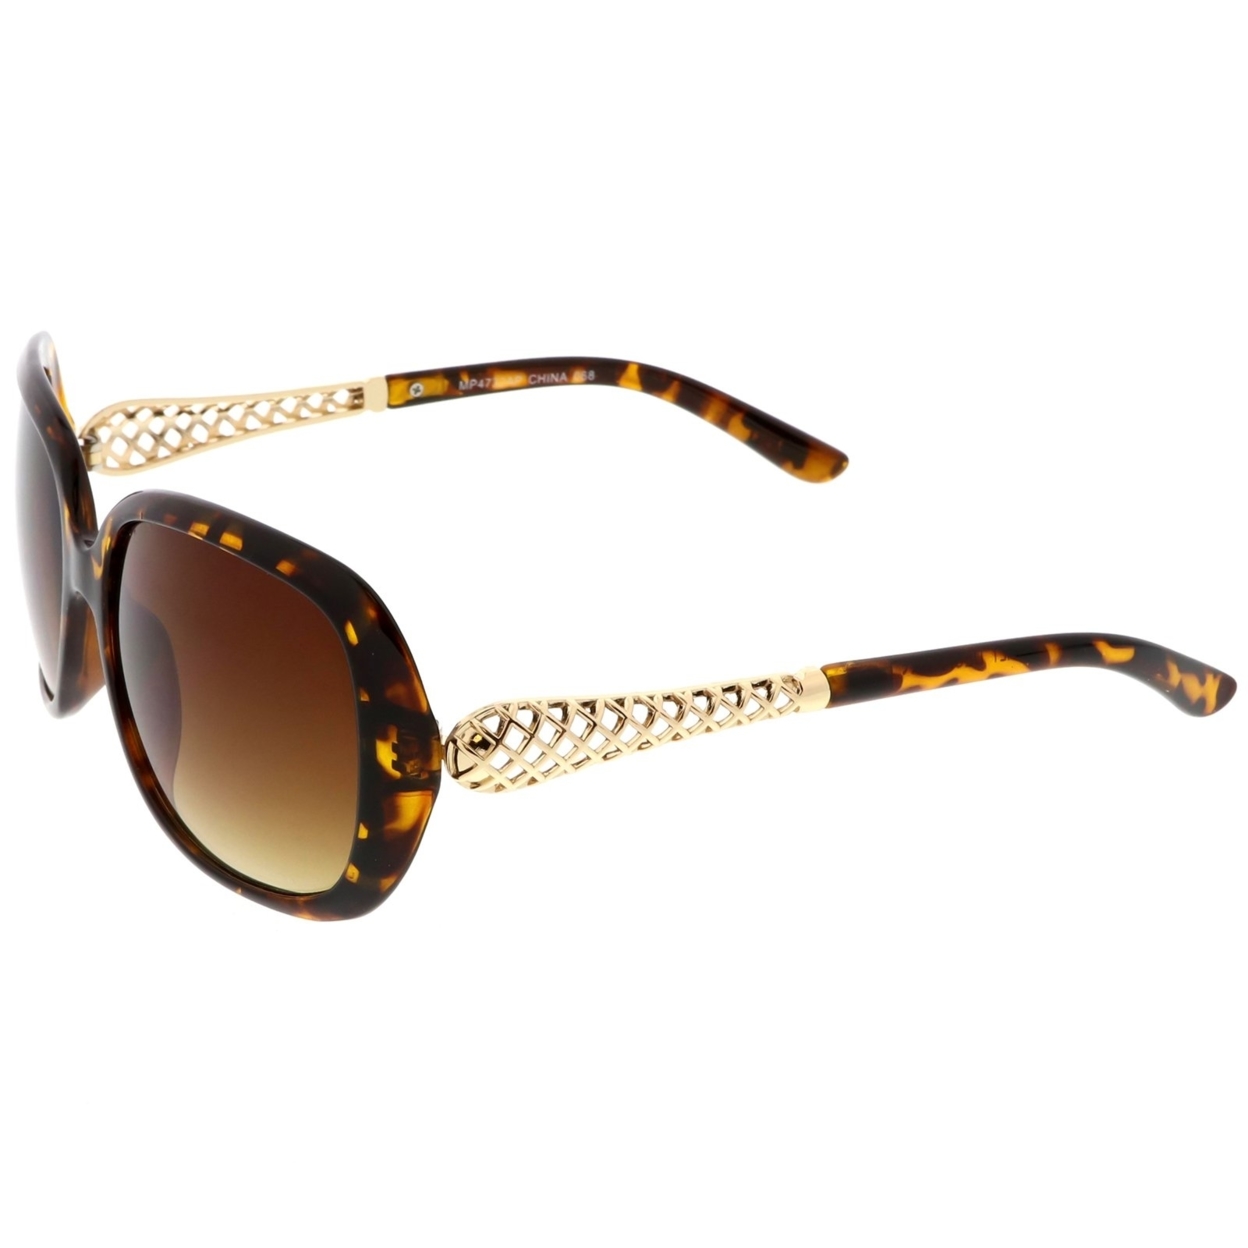 Women's Oversize Square Sunglasses With Metal Arm Accents Gradient Lens 59mm - Black Gold / Lavender